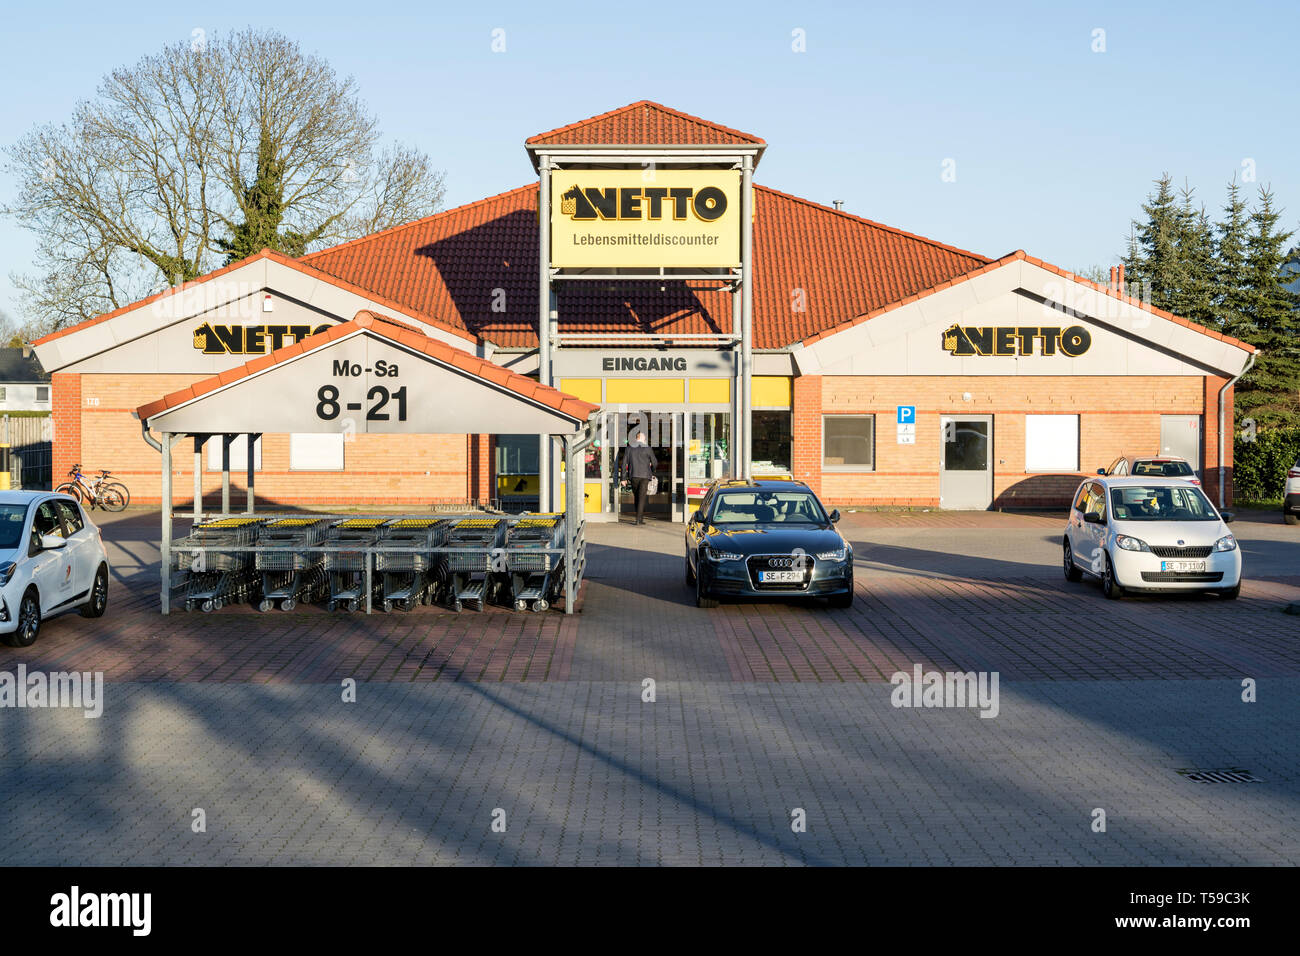 Netto Lebensmitteldiscounter branch in Henstedt-Ulzburg. Netto is a Danish discount supermarket operating in Denmark, Germany, Poland and Sweden. Stock Photo